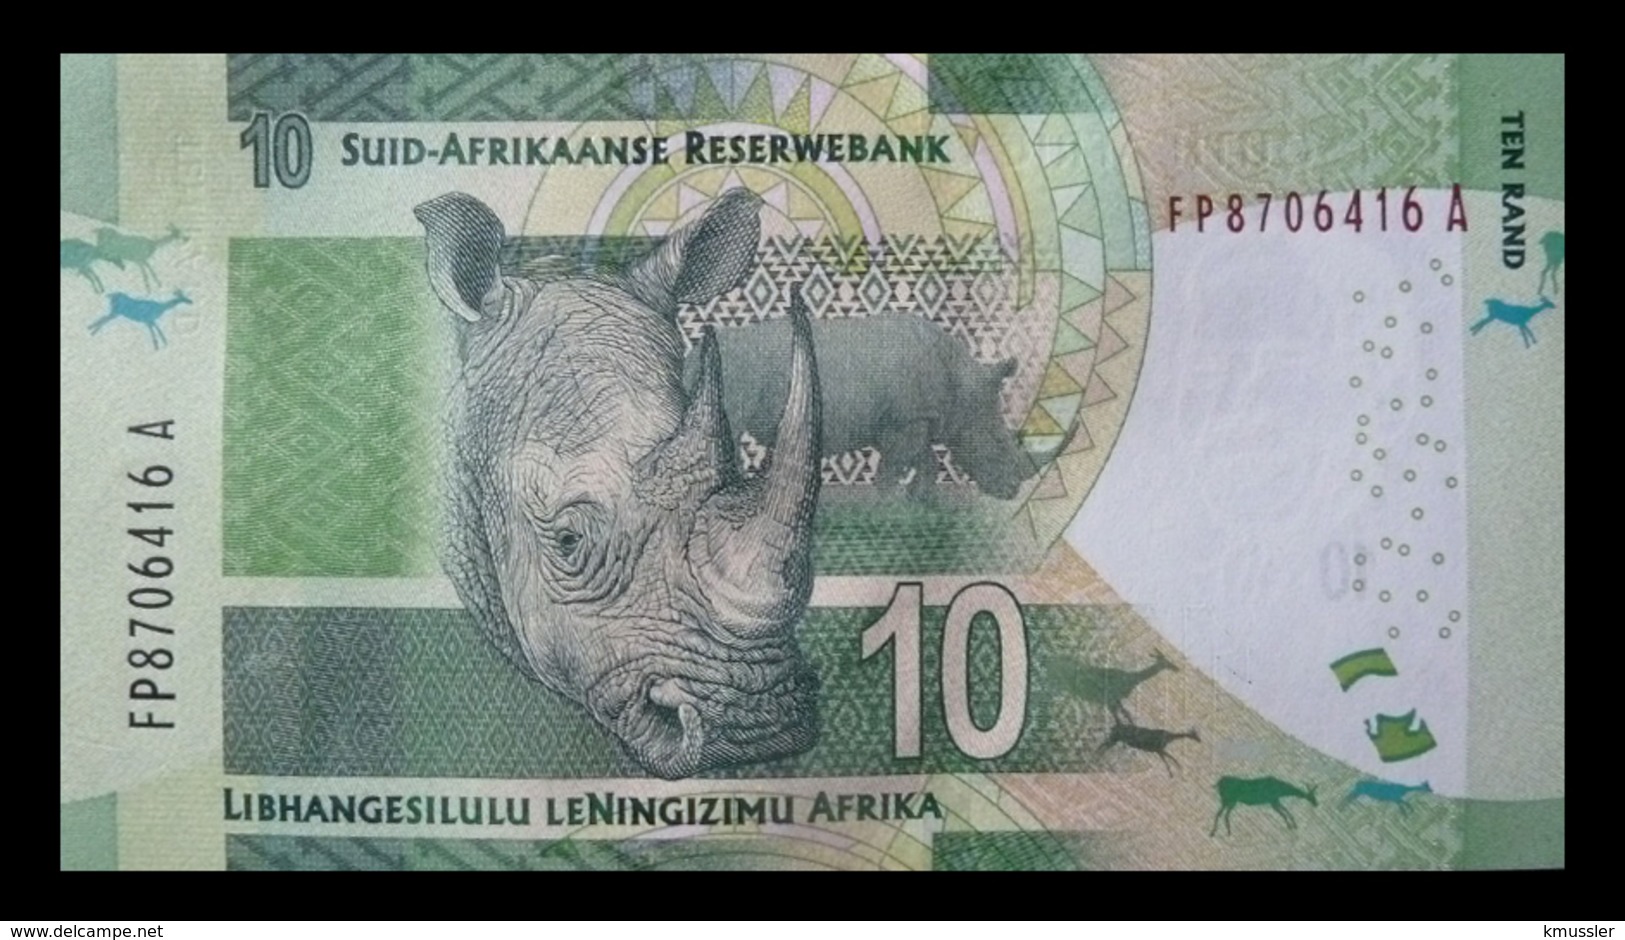 # # # Banknote Südafrika (South Africa) 10 Rand UNC # # # - Südafrika